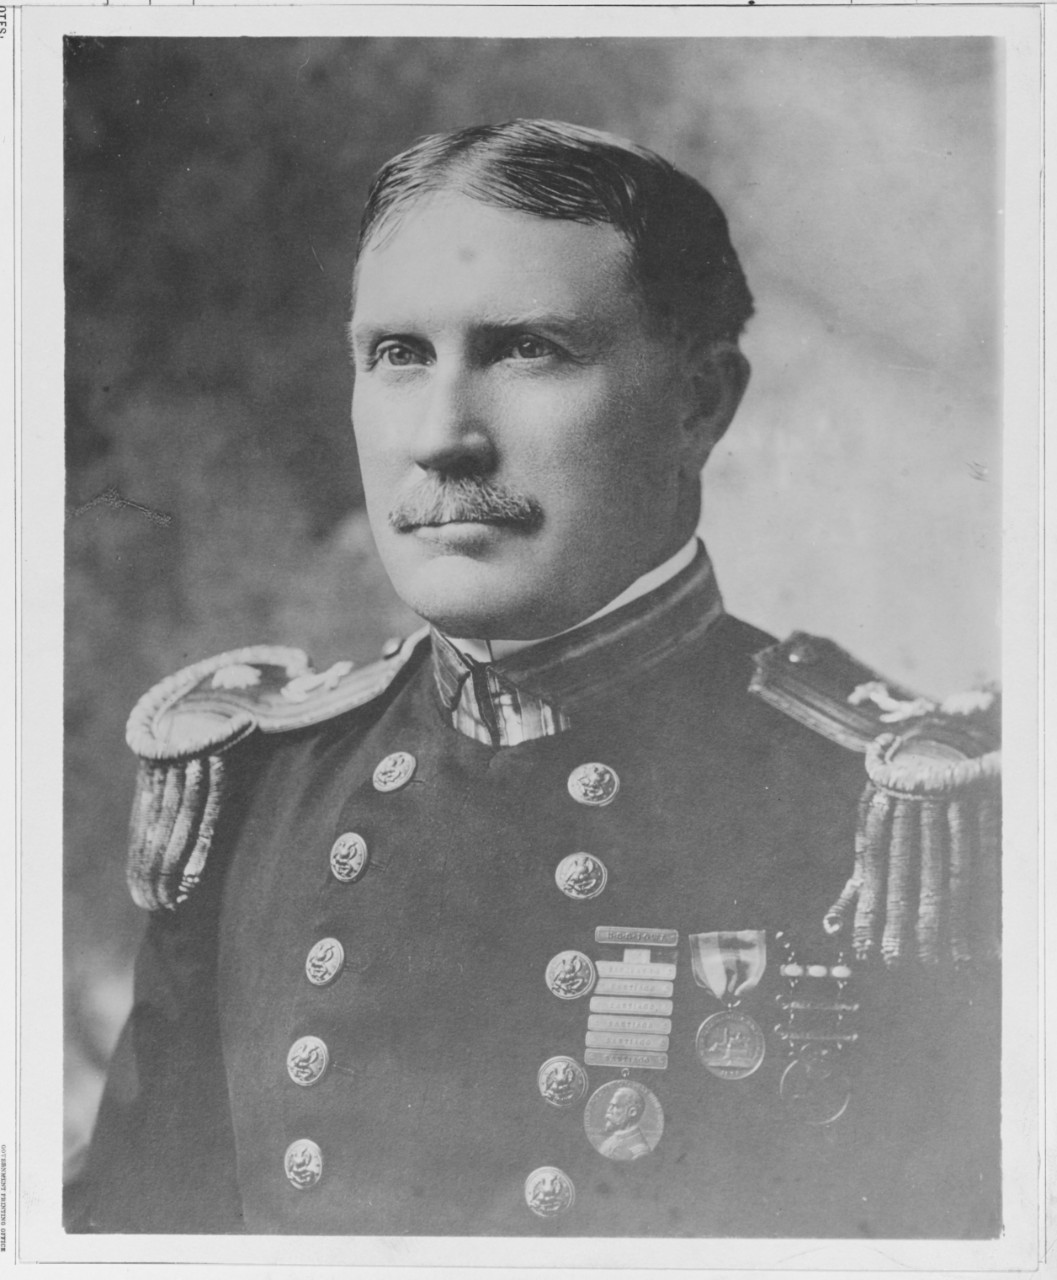 Commander Martin E. Trench, USN